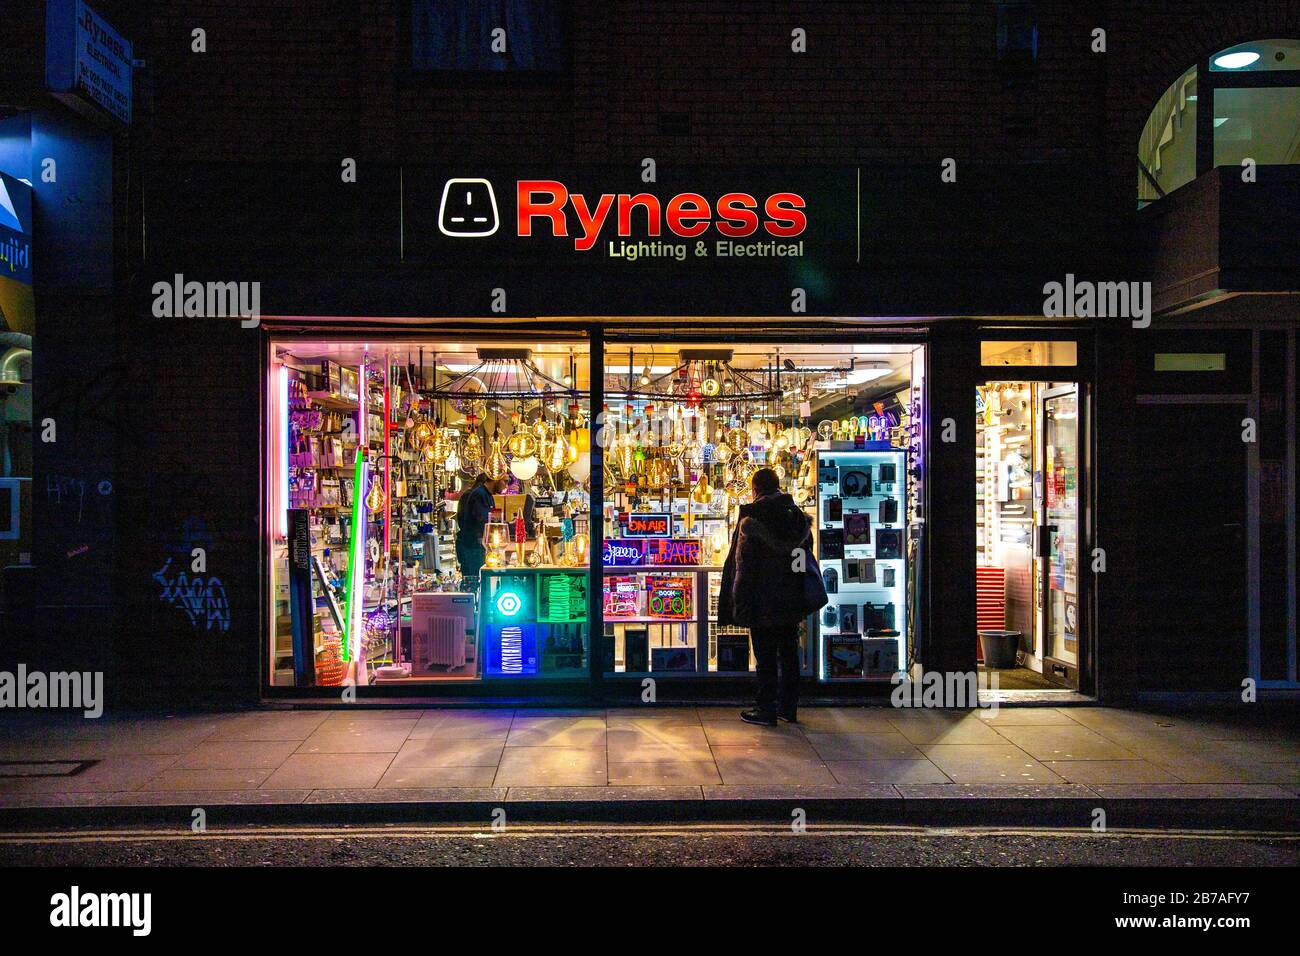 Ryness lighting shop in Soho, London, UK Stock Photo